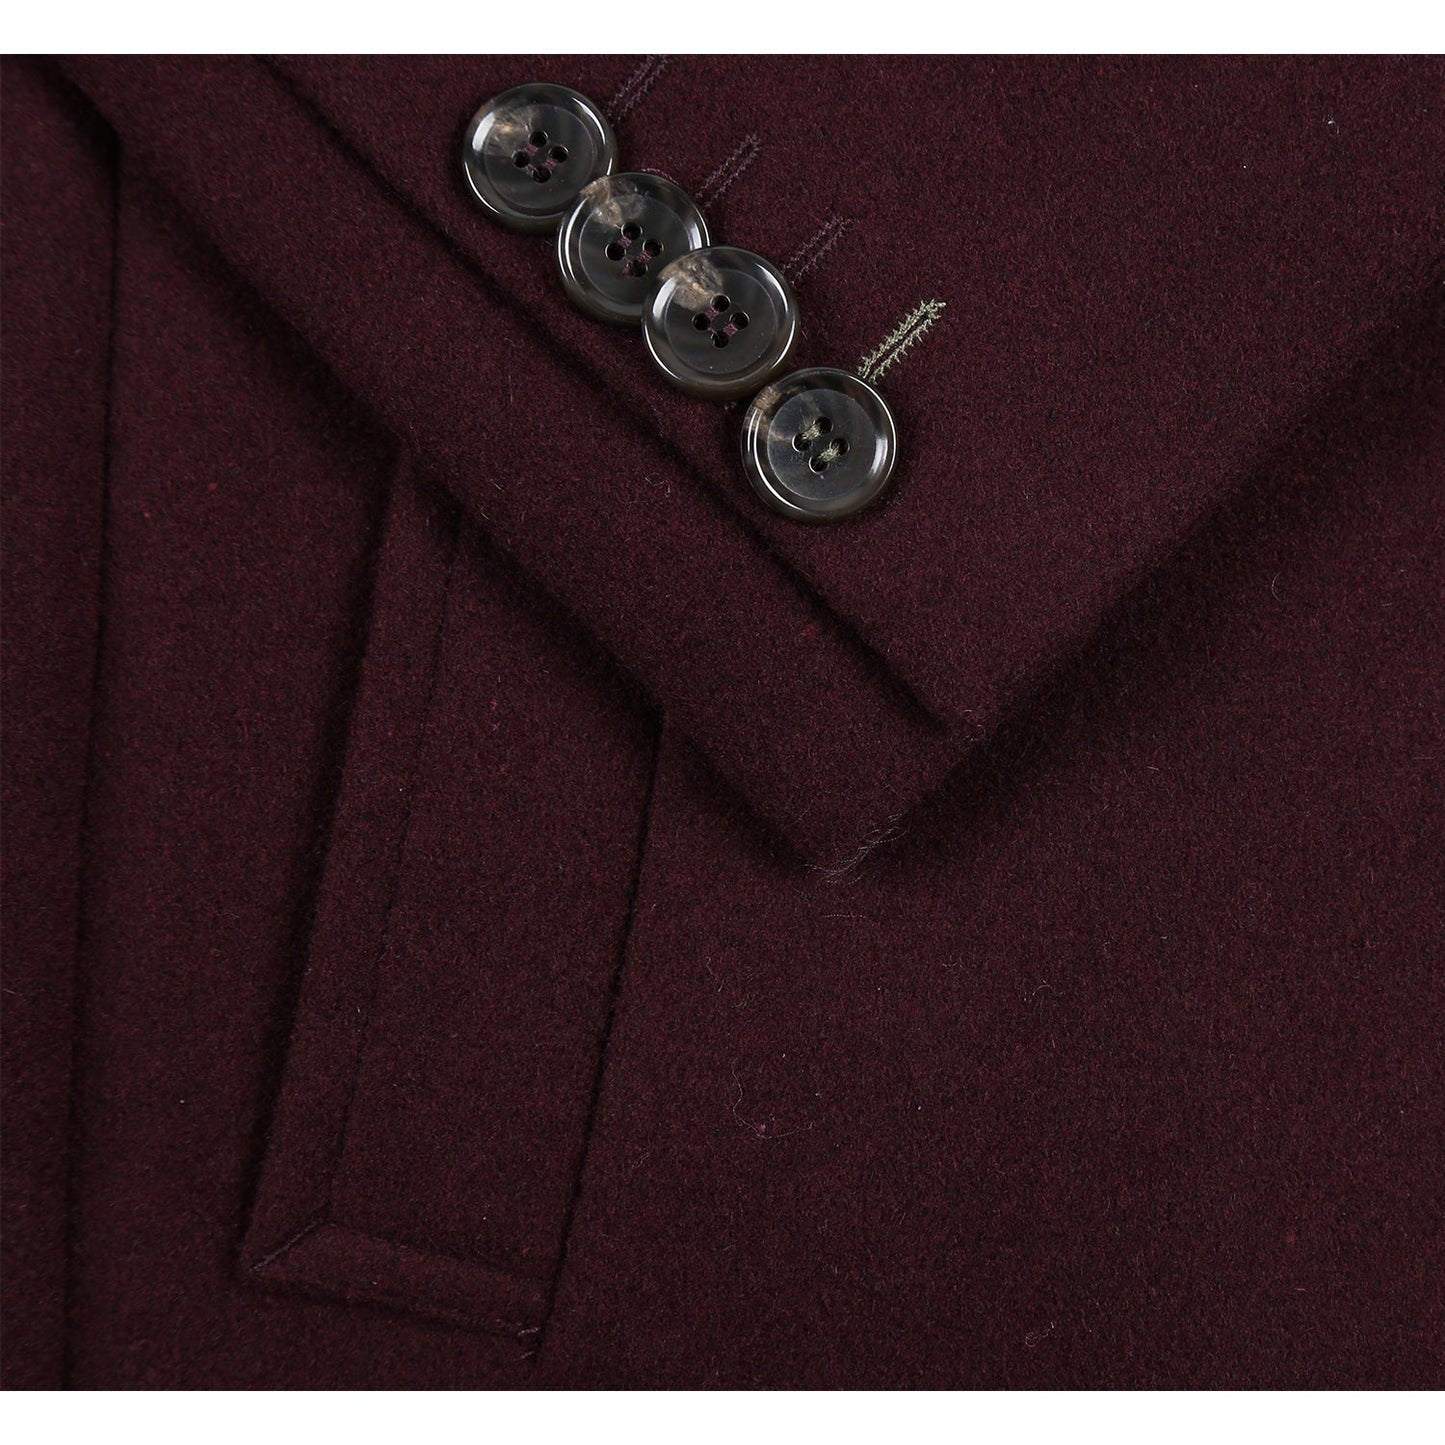 EL53-01-700 English Laundry Wool Blend Burgundy Car Coat